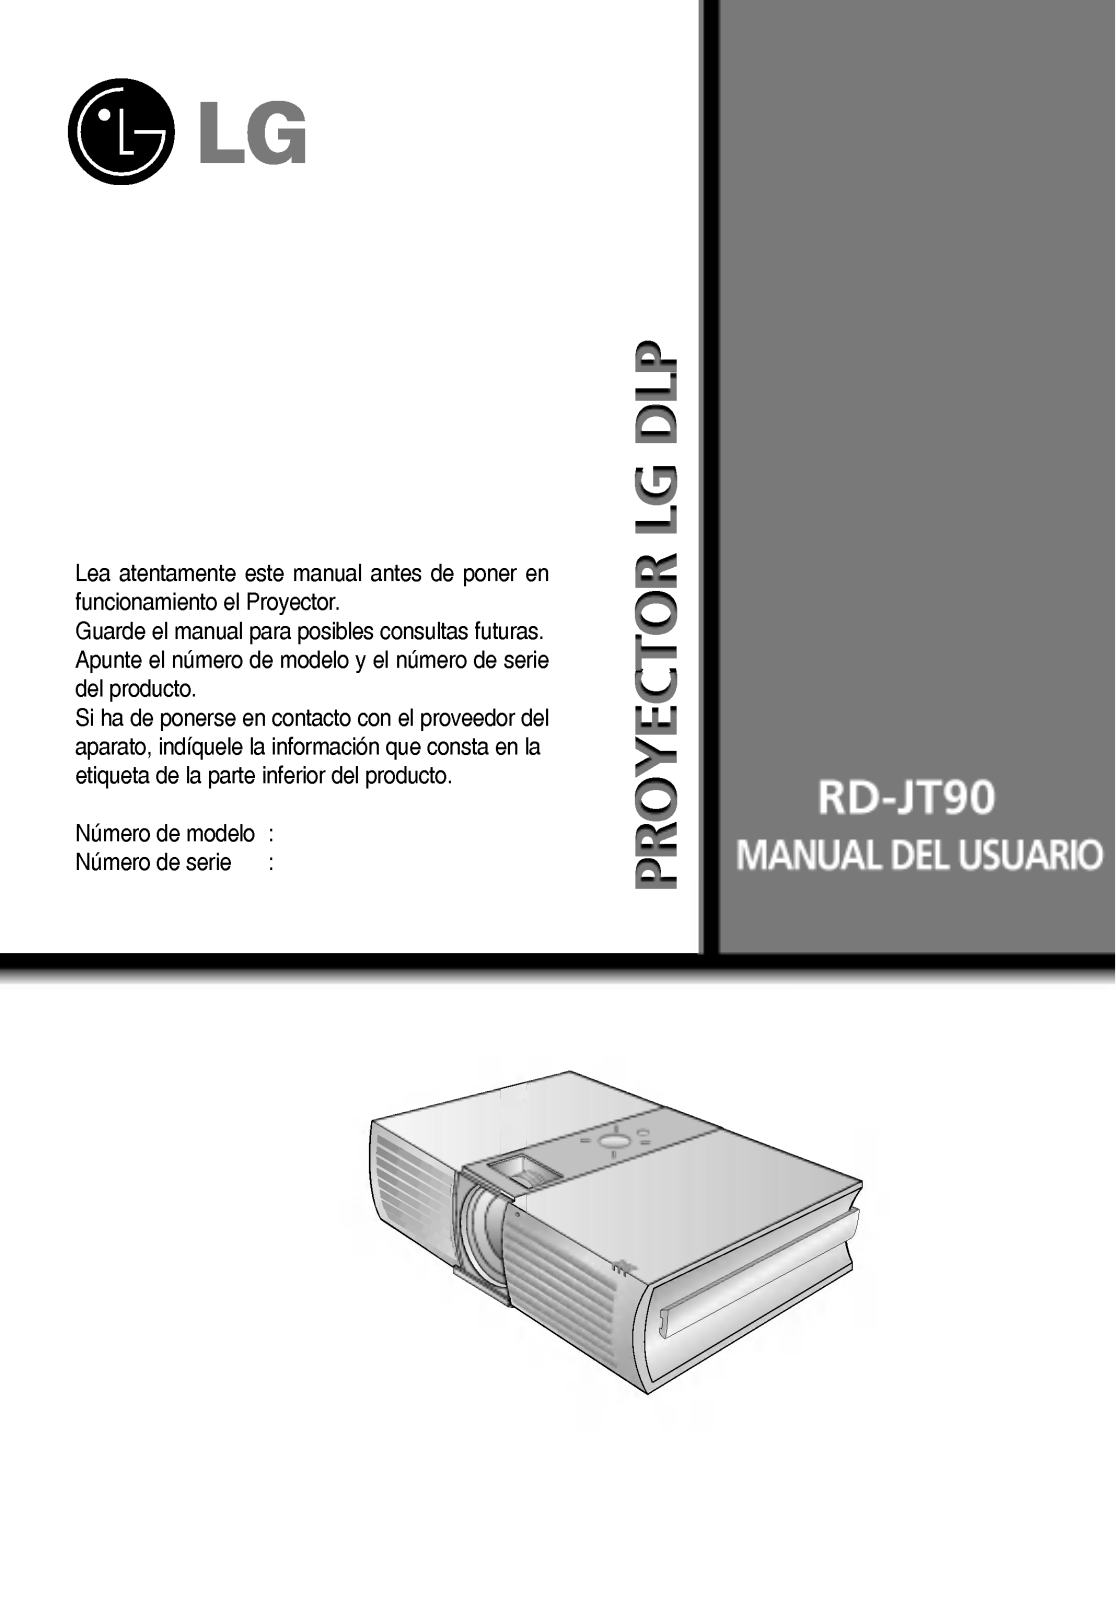 LG RD-JT90 User Manual